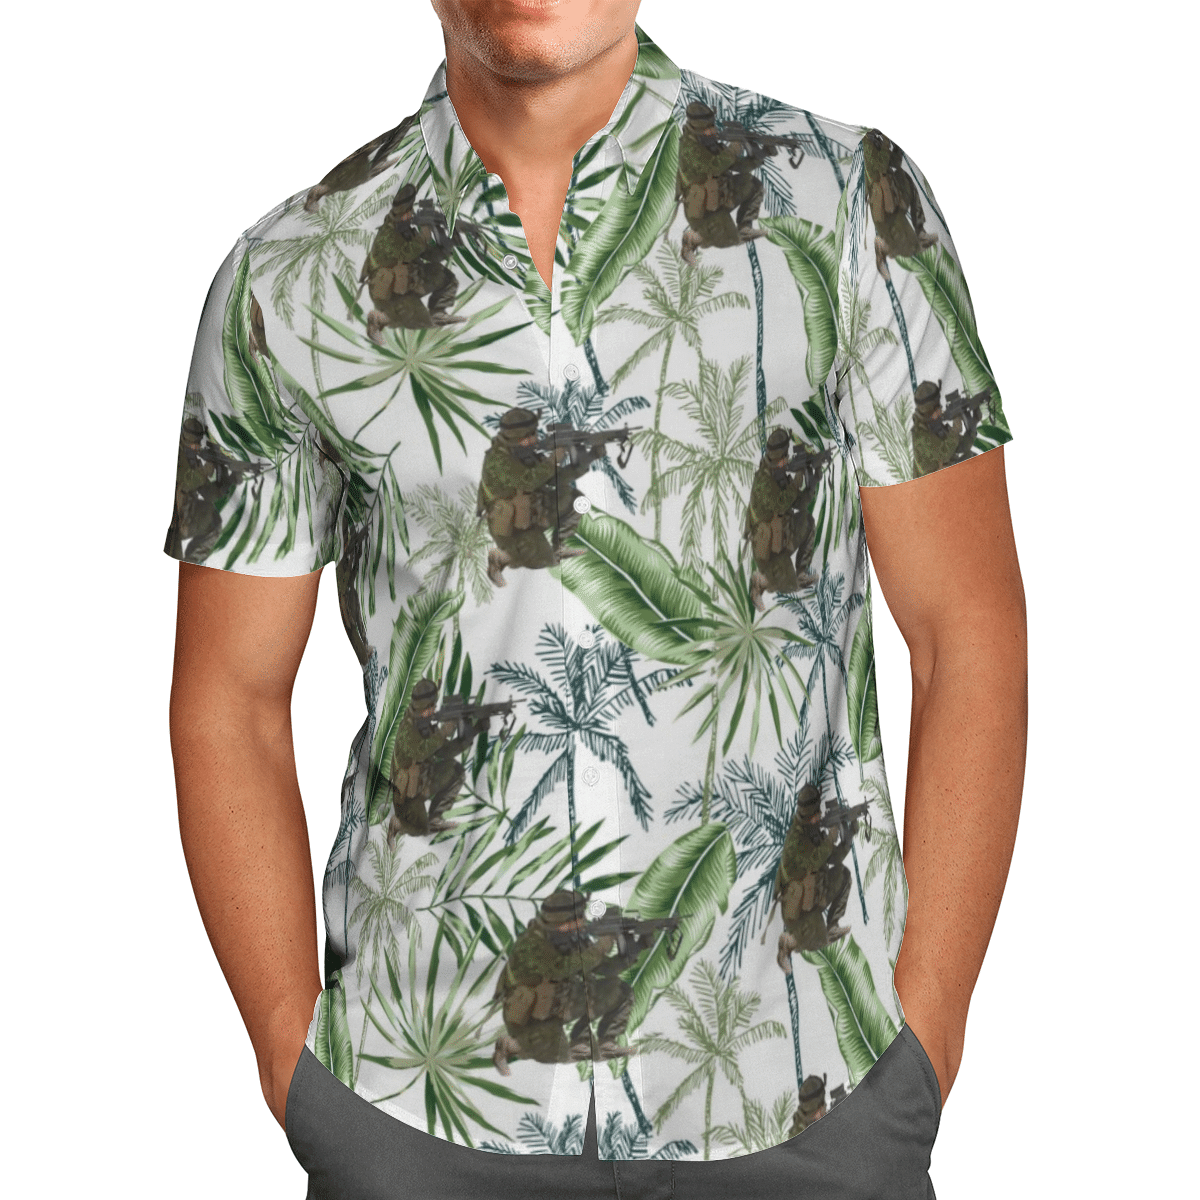 Enjoy your summer with top cool hawaiian shirt below 72